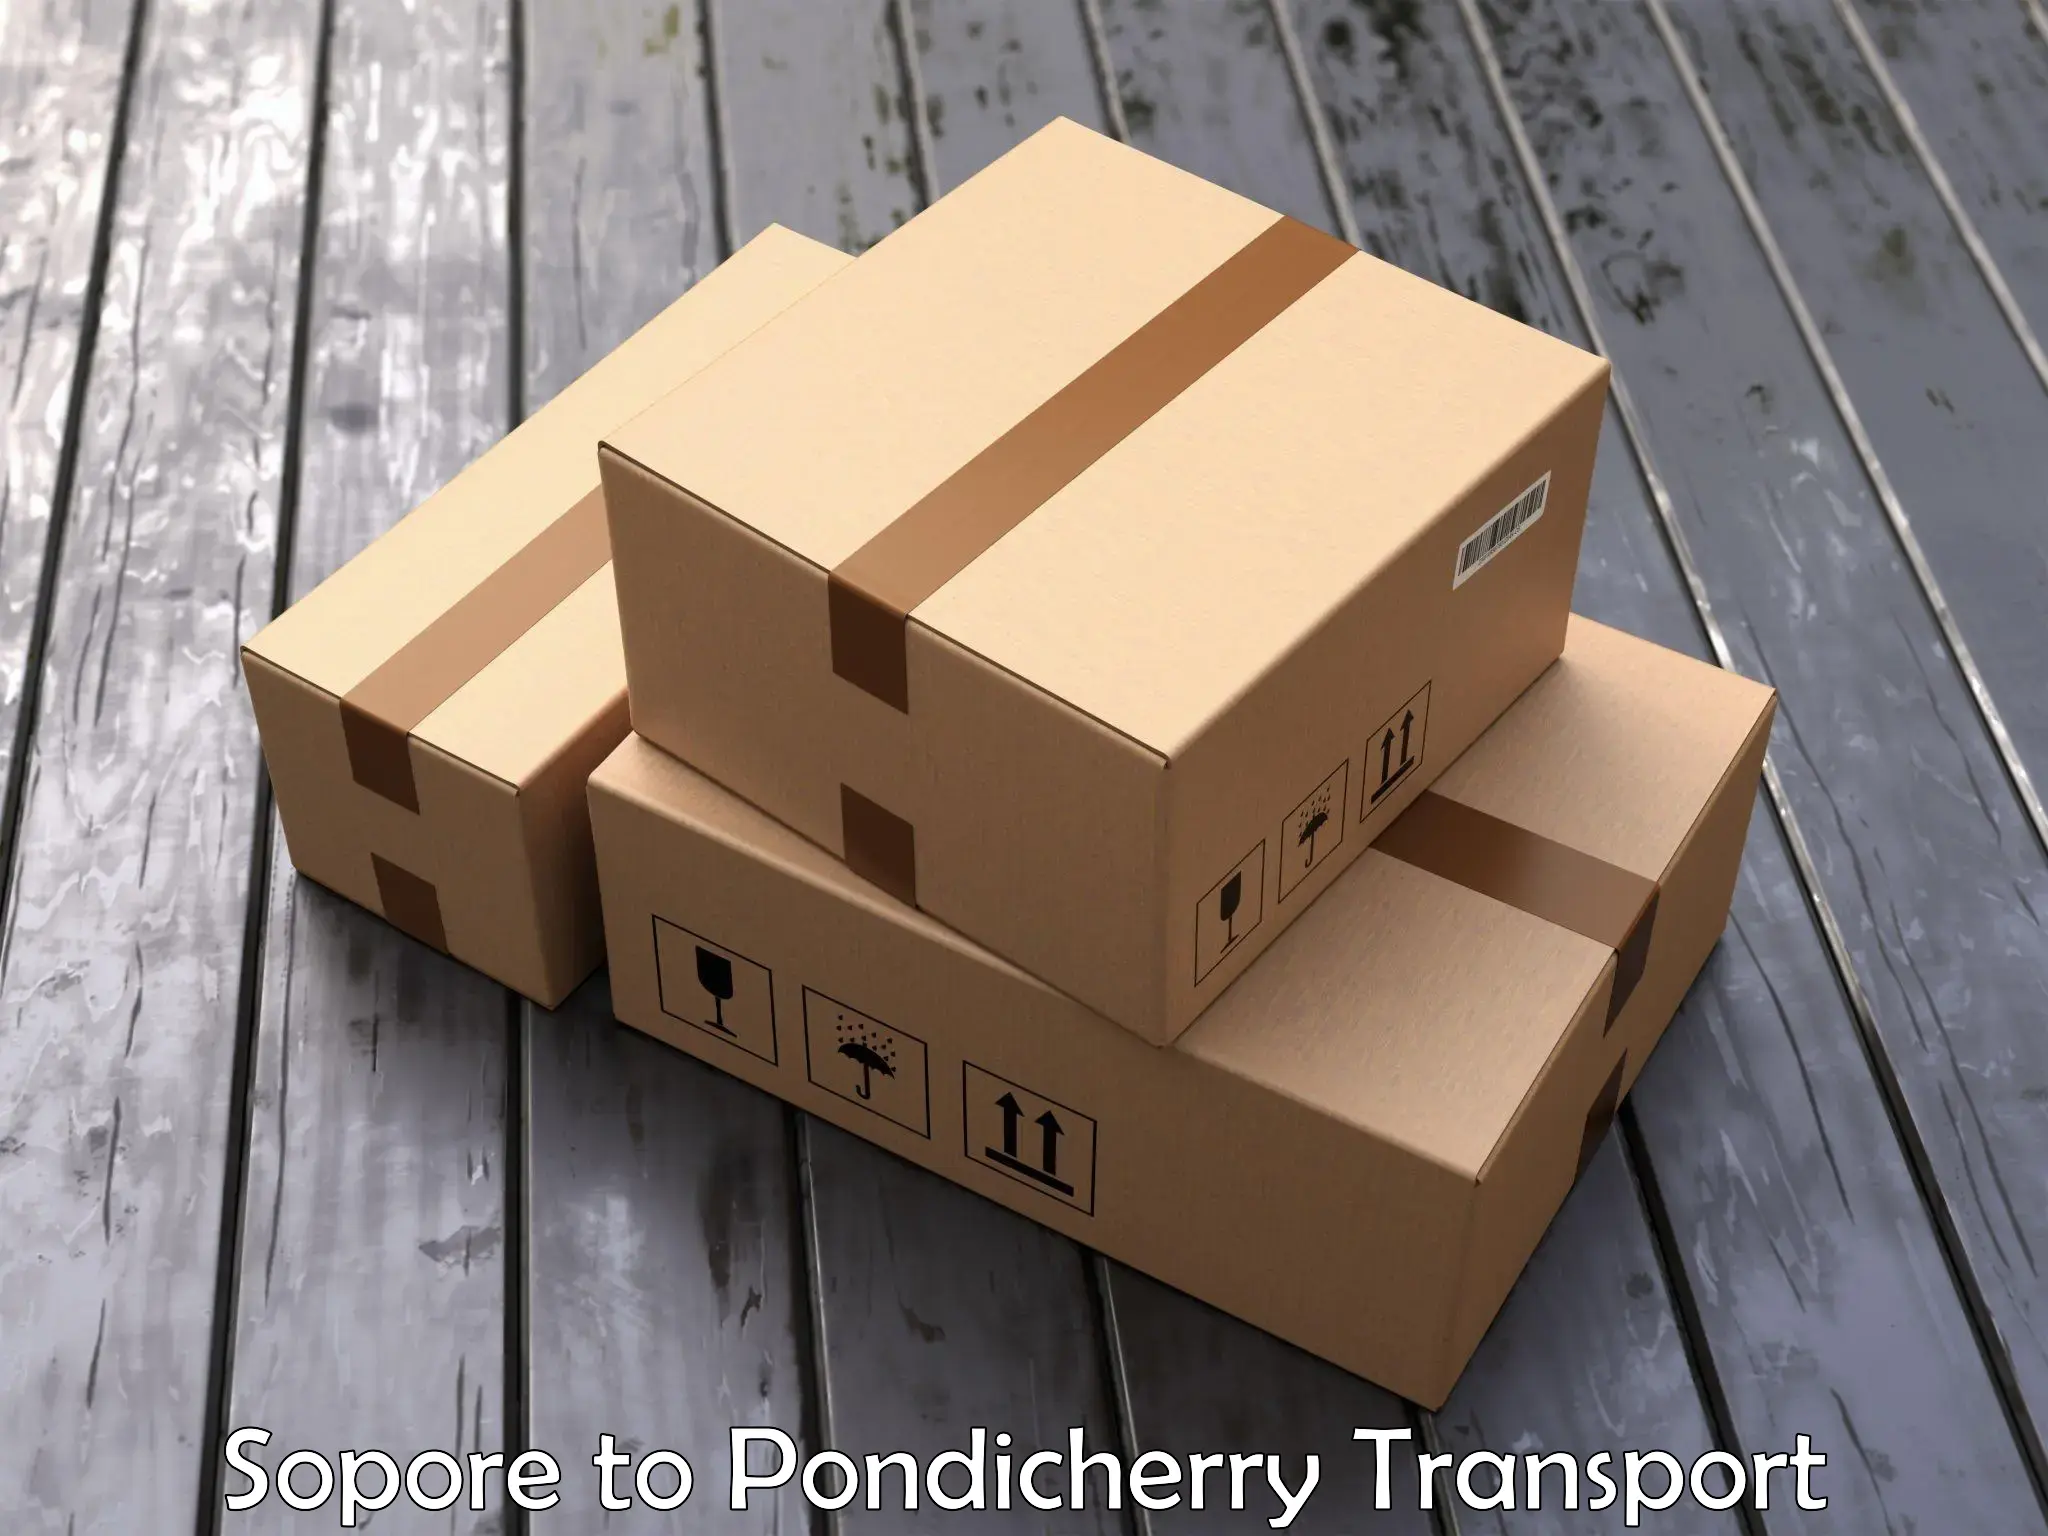 Goods delivery service Sopore to Pondicherry